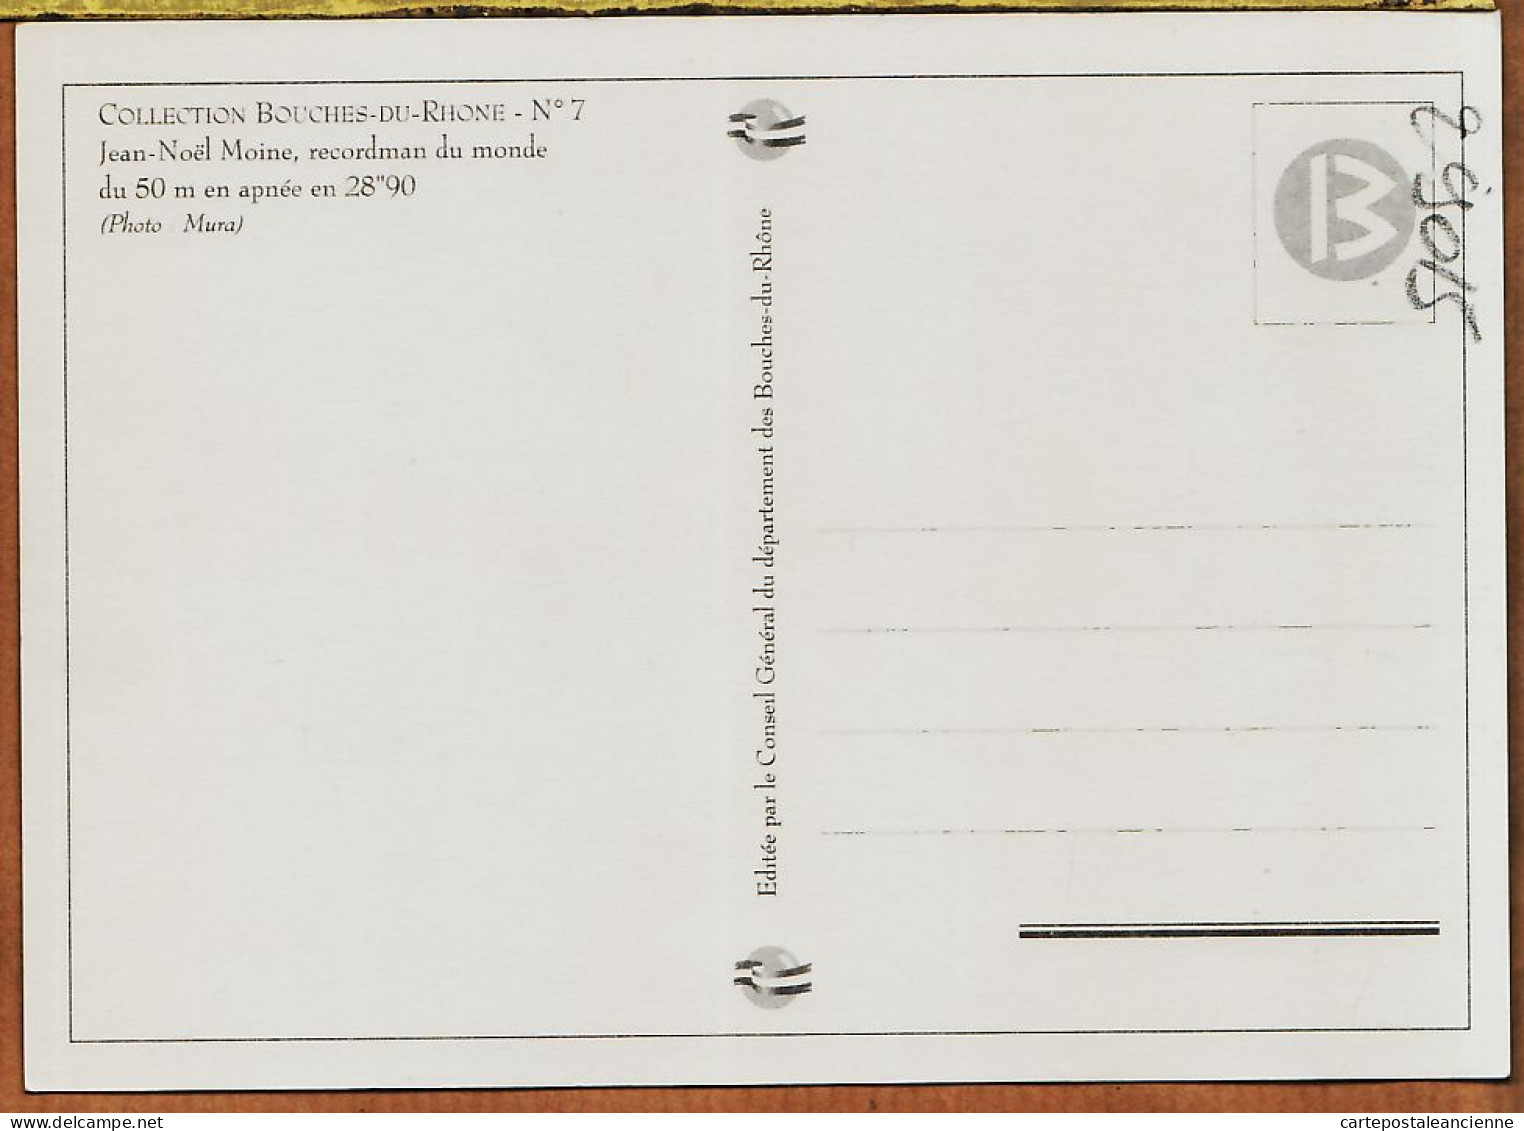 04811 / MARSEILLE Jean-Noël MOINE Recordman Du Monde 50 M Apnée 28"90 Photo MURA Collection BOUCHES Du RHONE N°7 - Natación